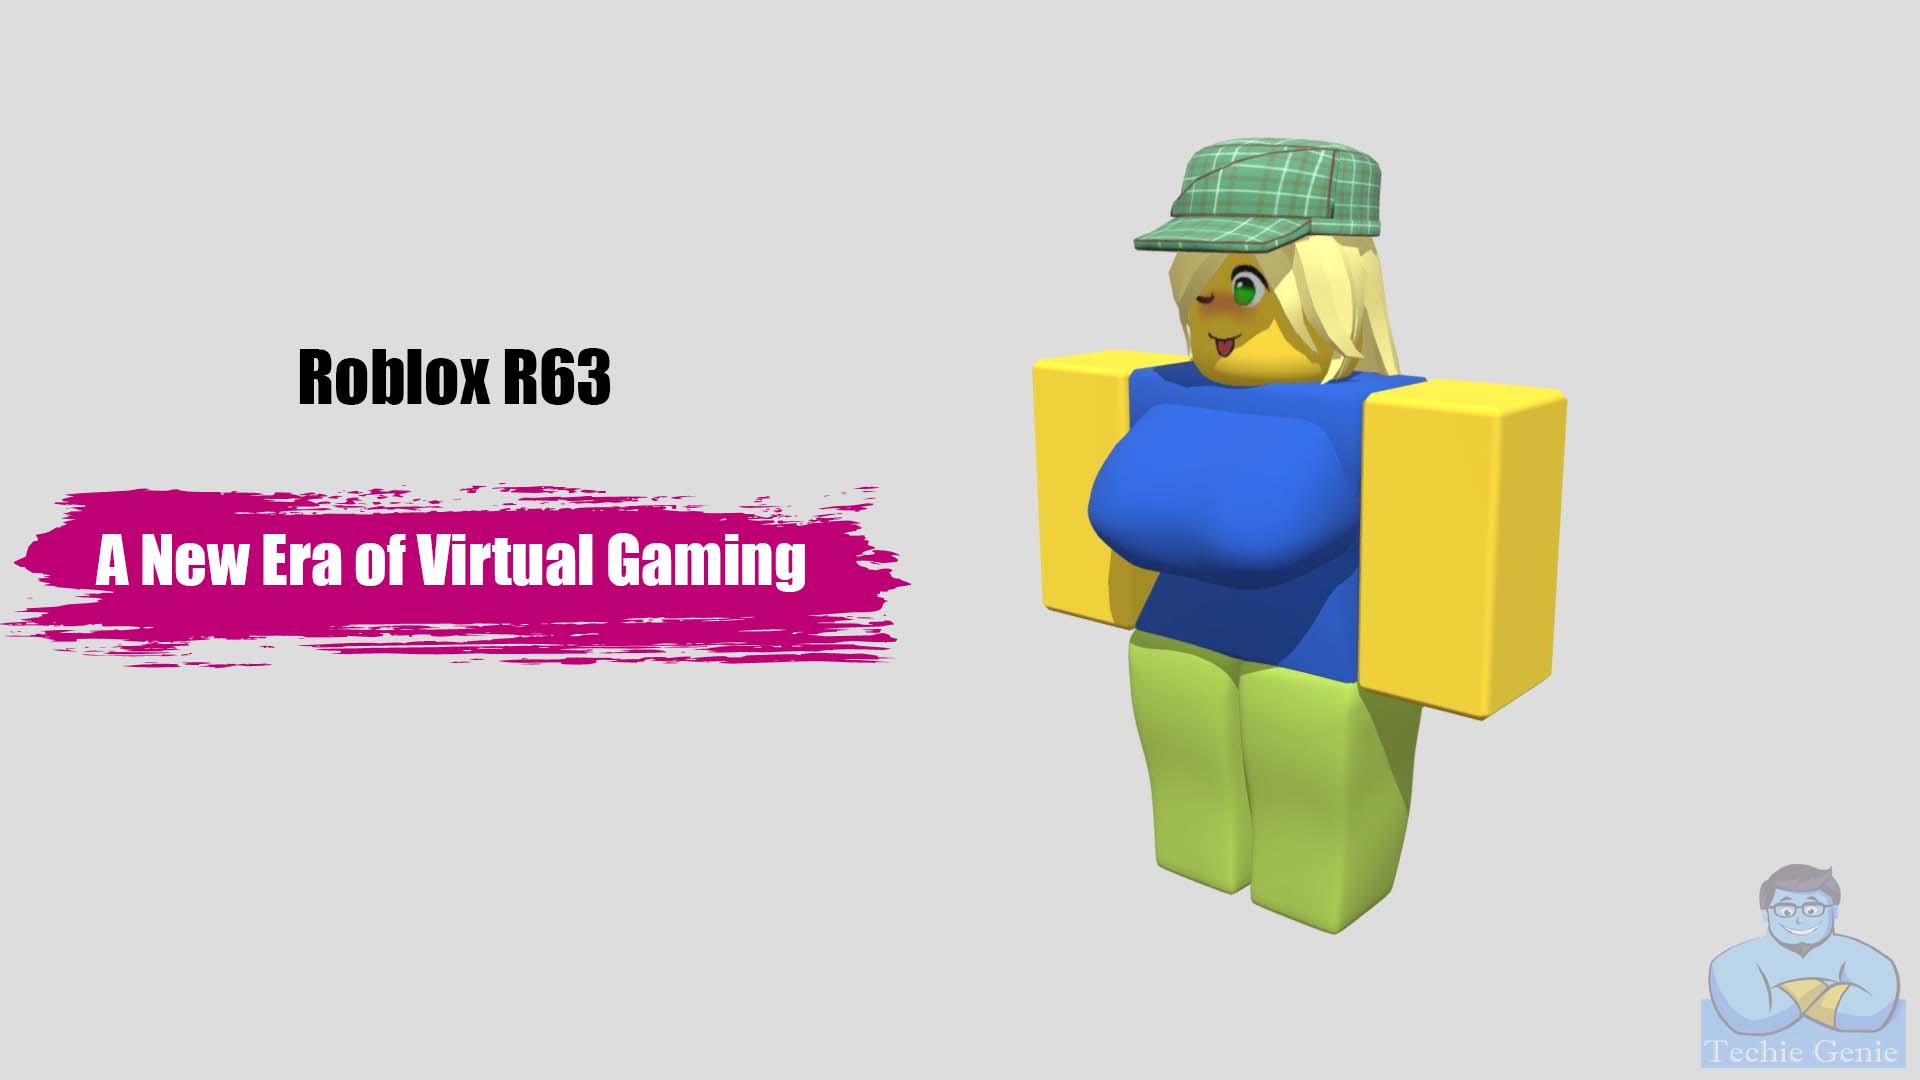 Roblox R63: A New Era of Virtual Gaming